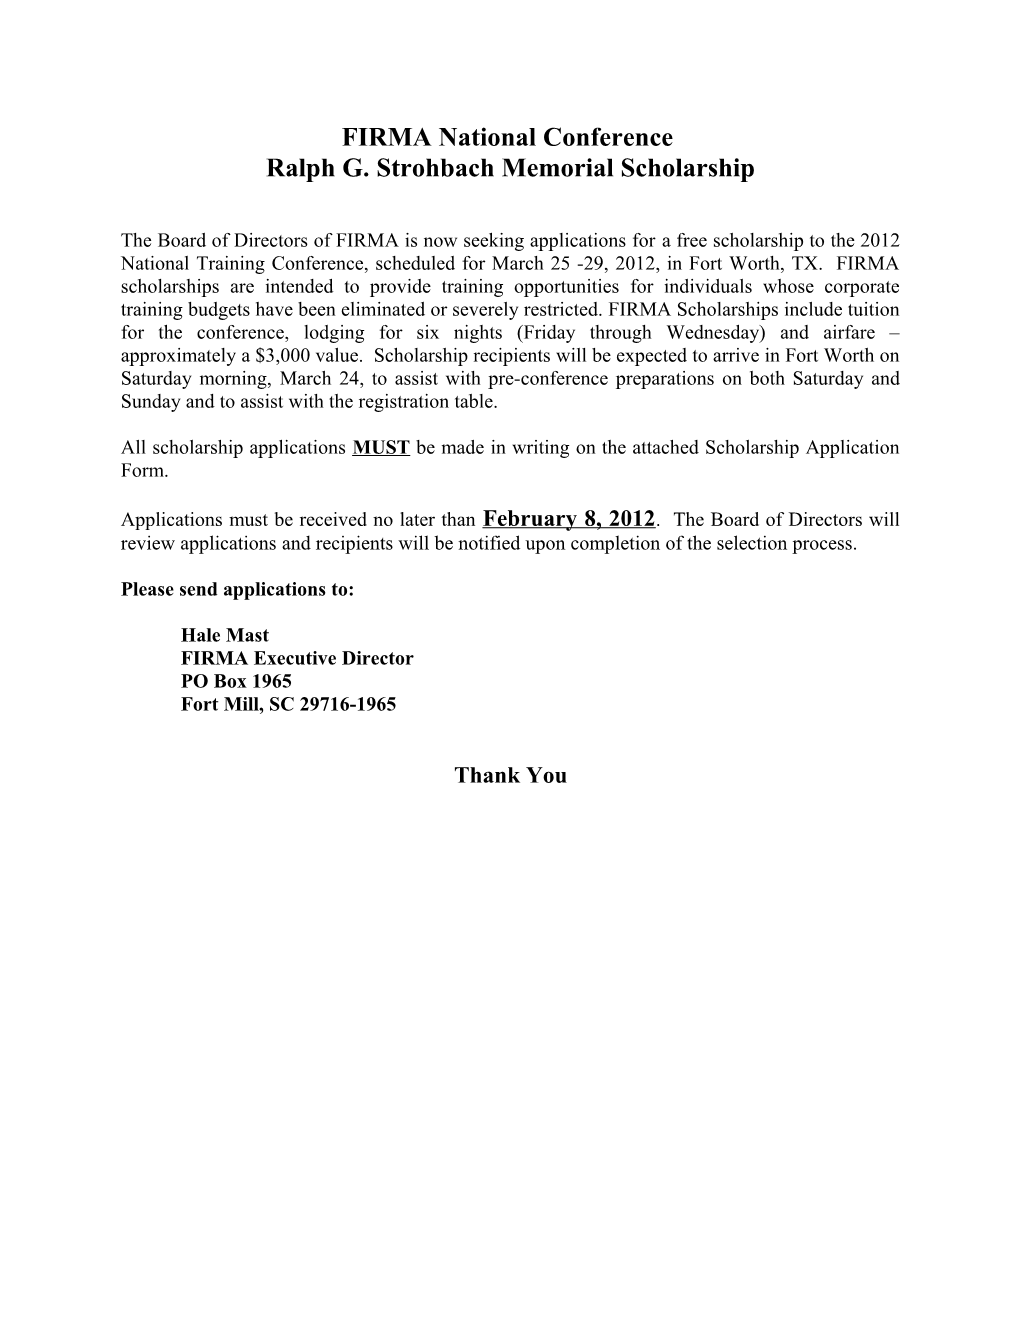 Ralph G. Strohbach Memorial Scholarship